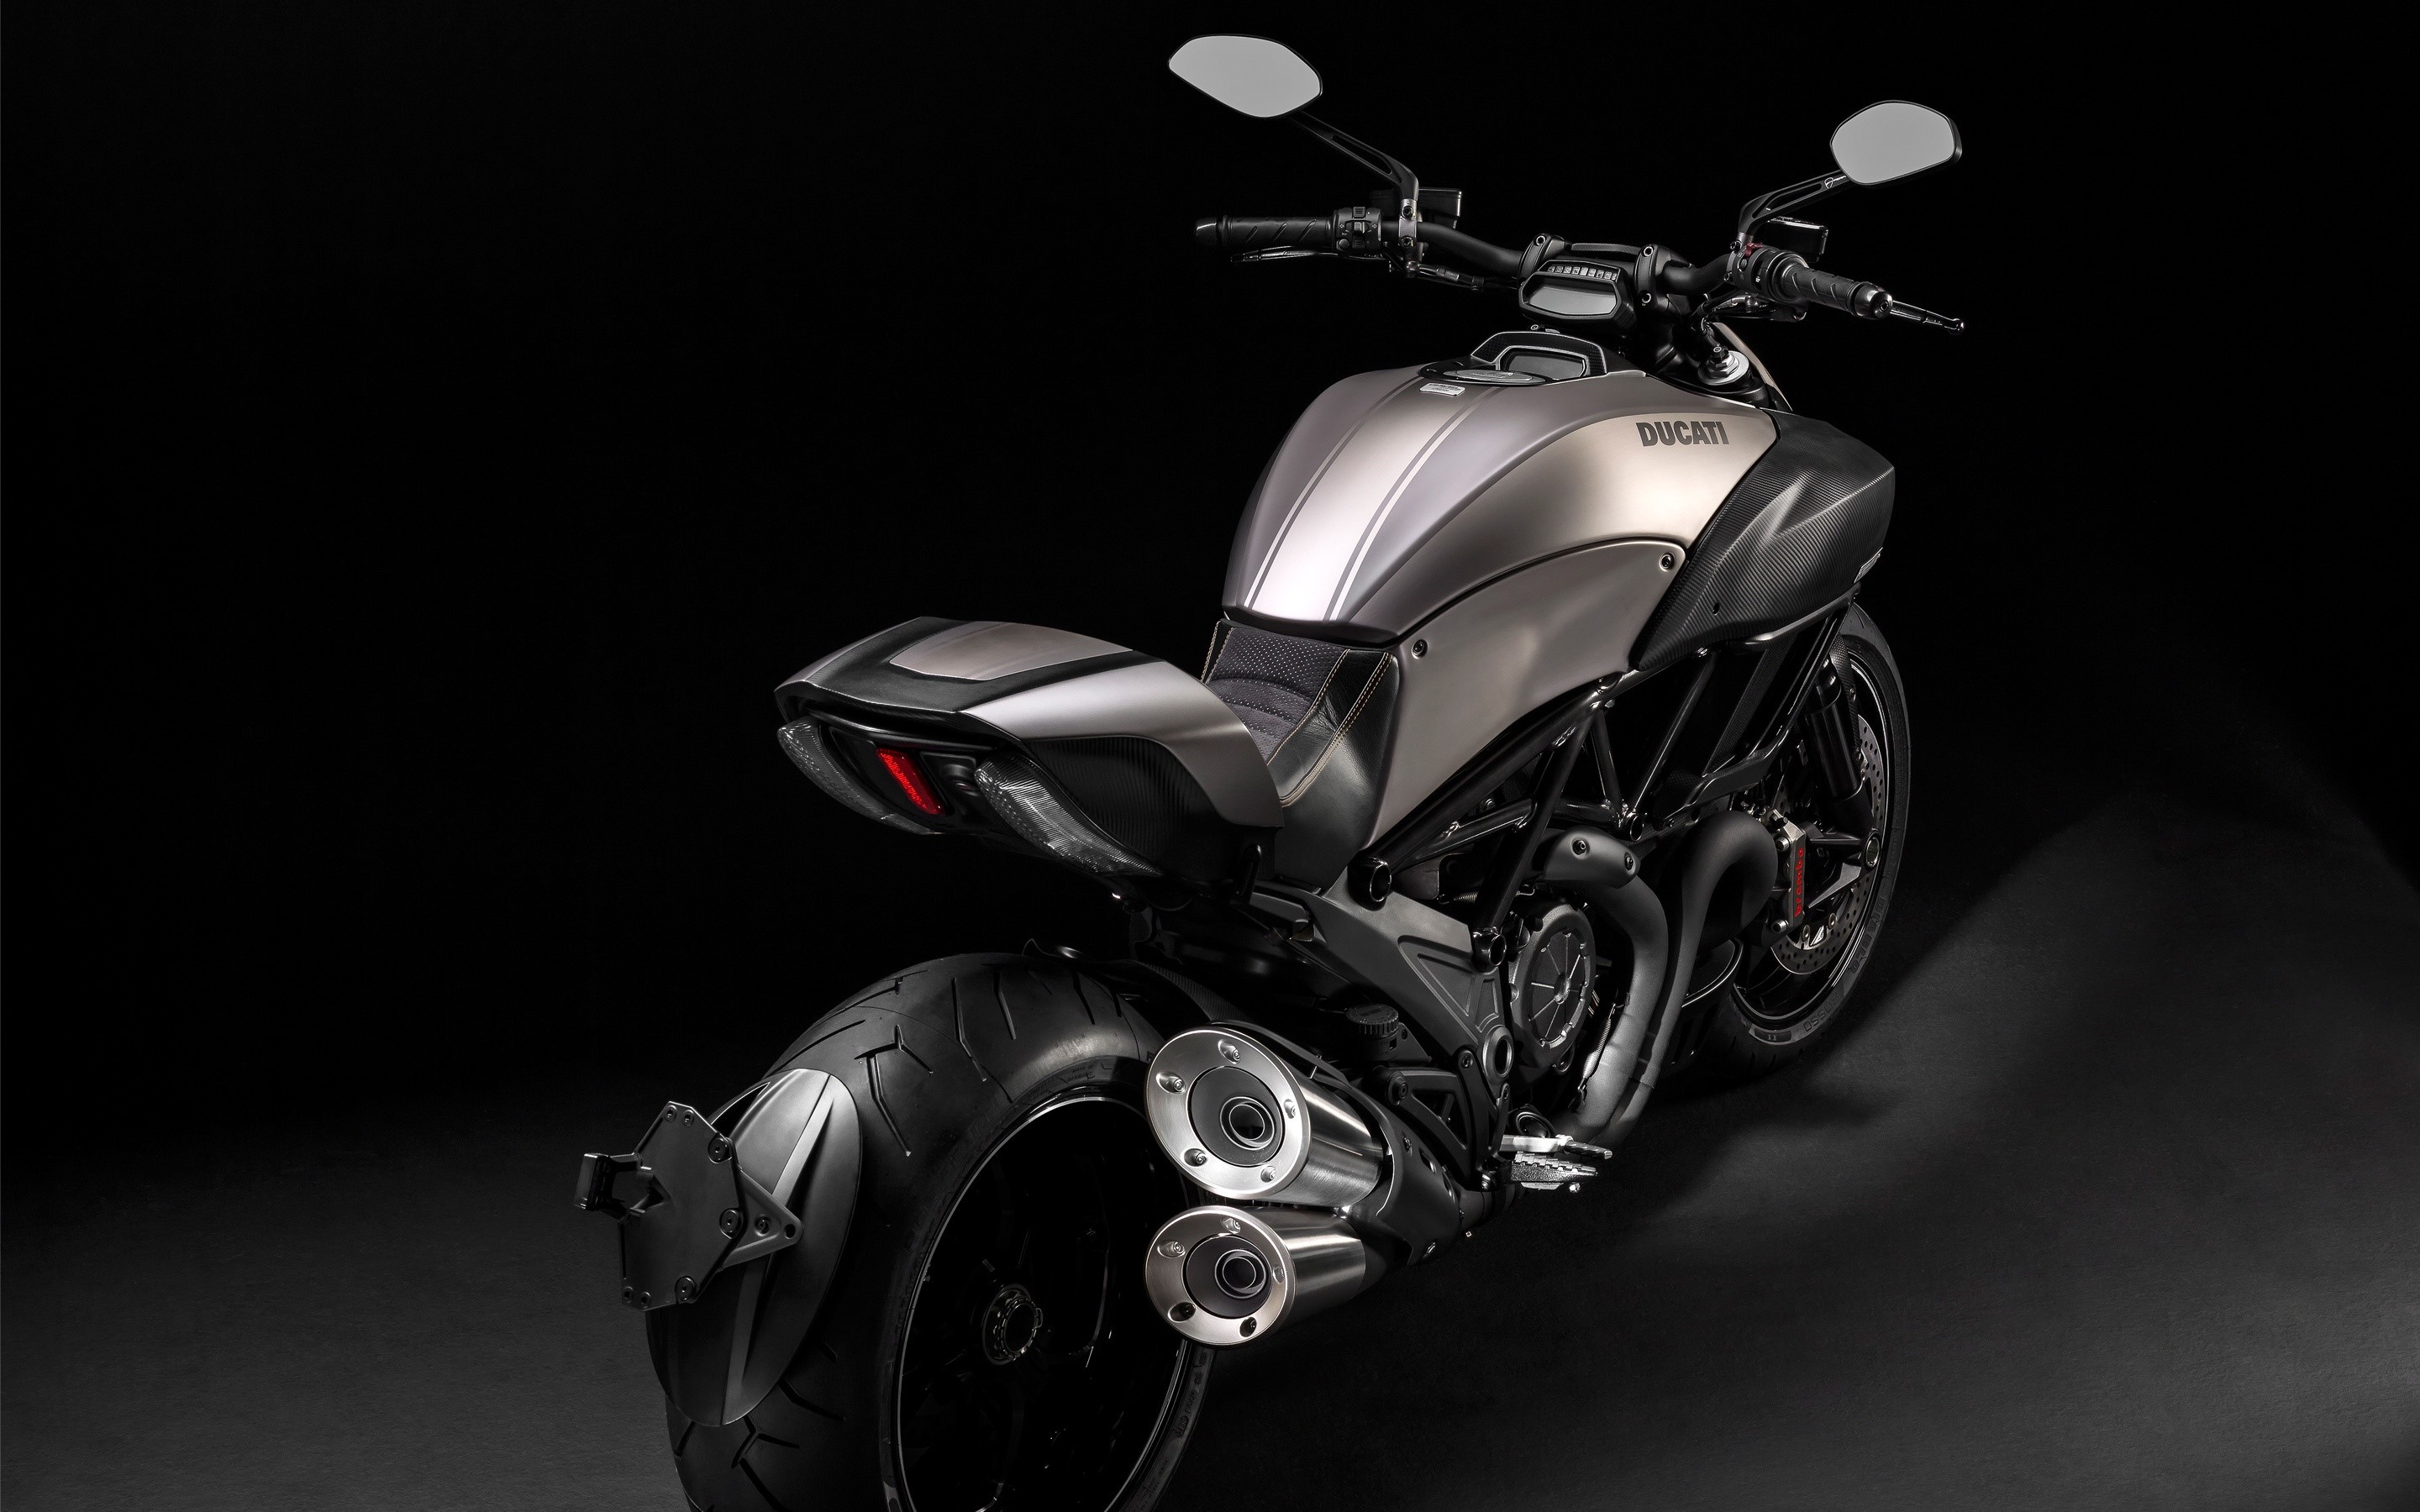 Тест-драйв мотоцикла Yamaha V-max 1700